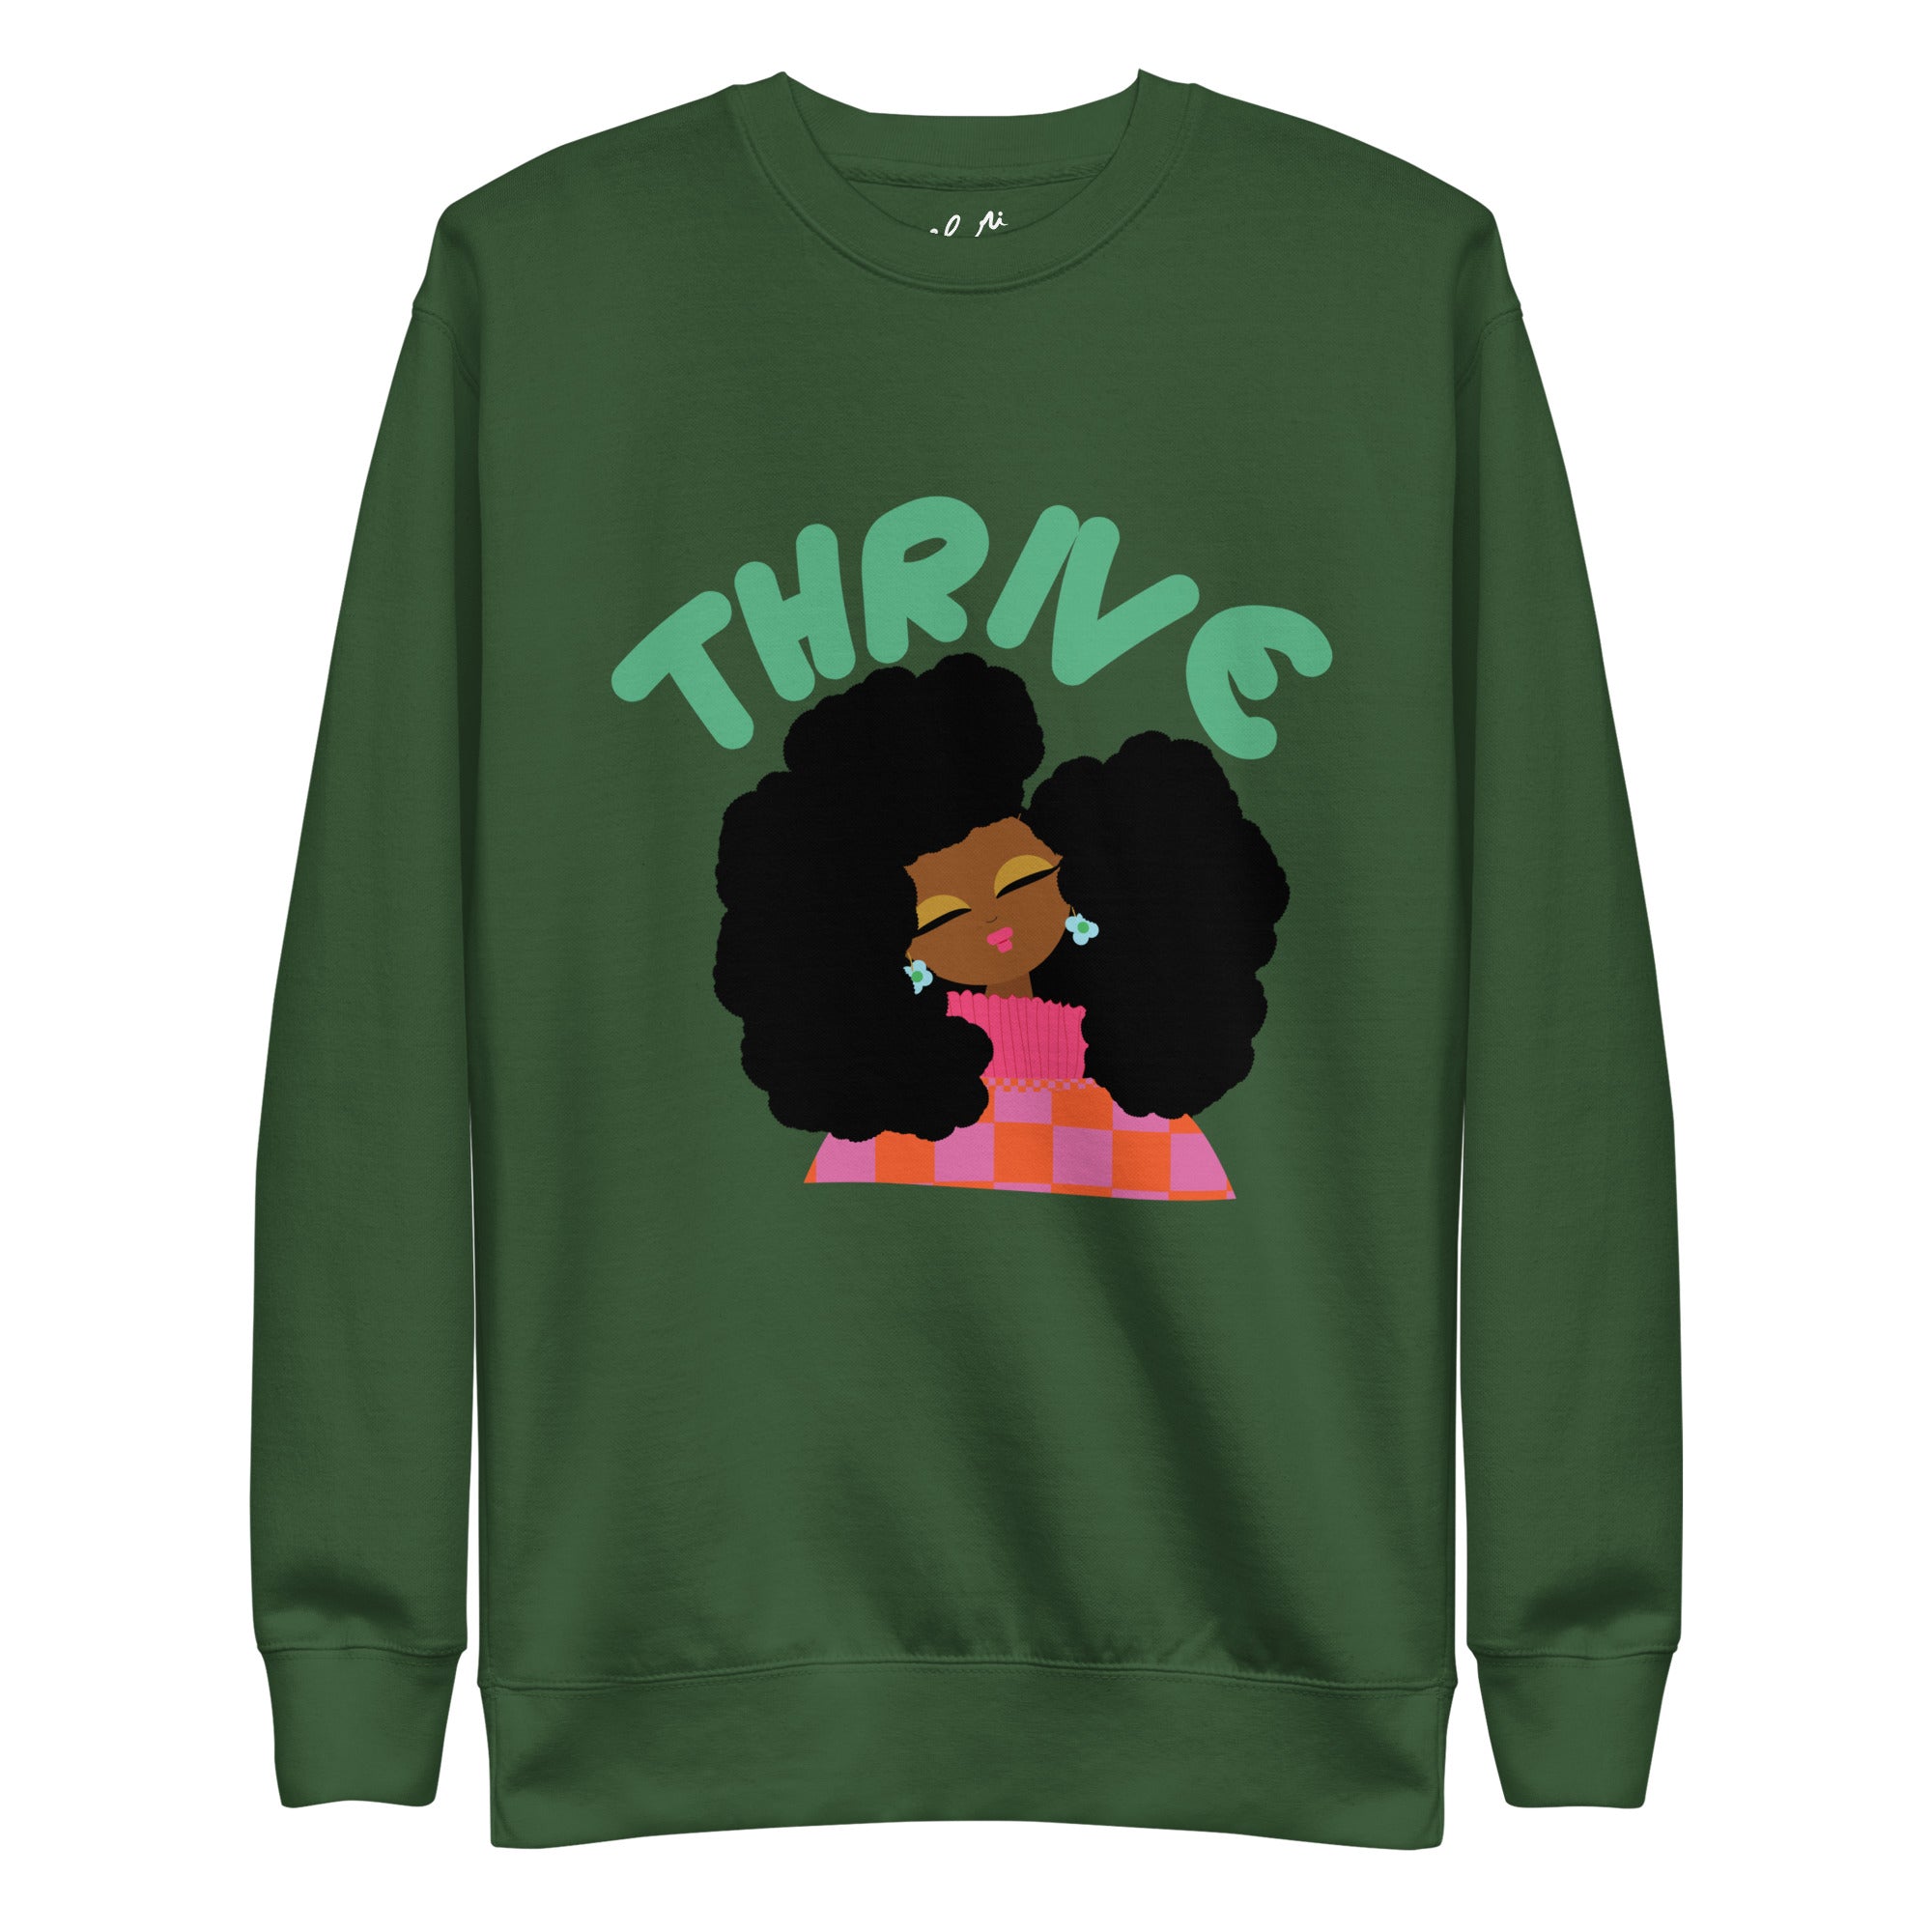 Thrive Sweatshirt